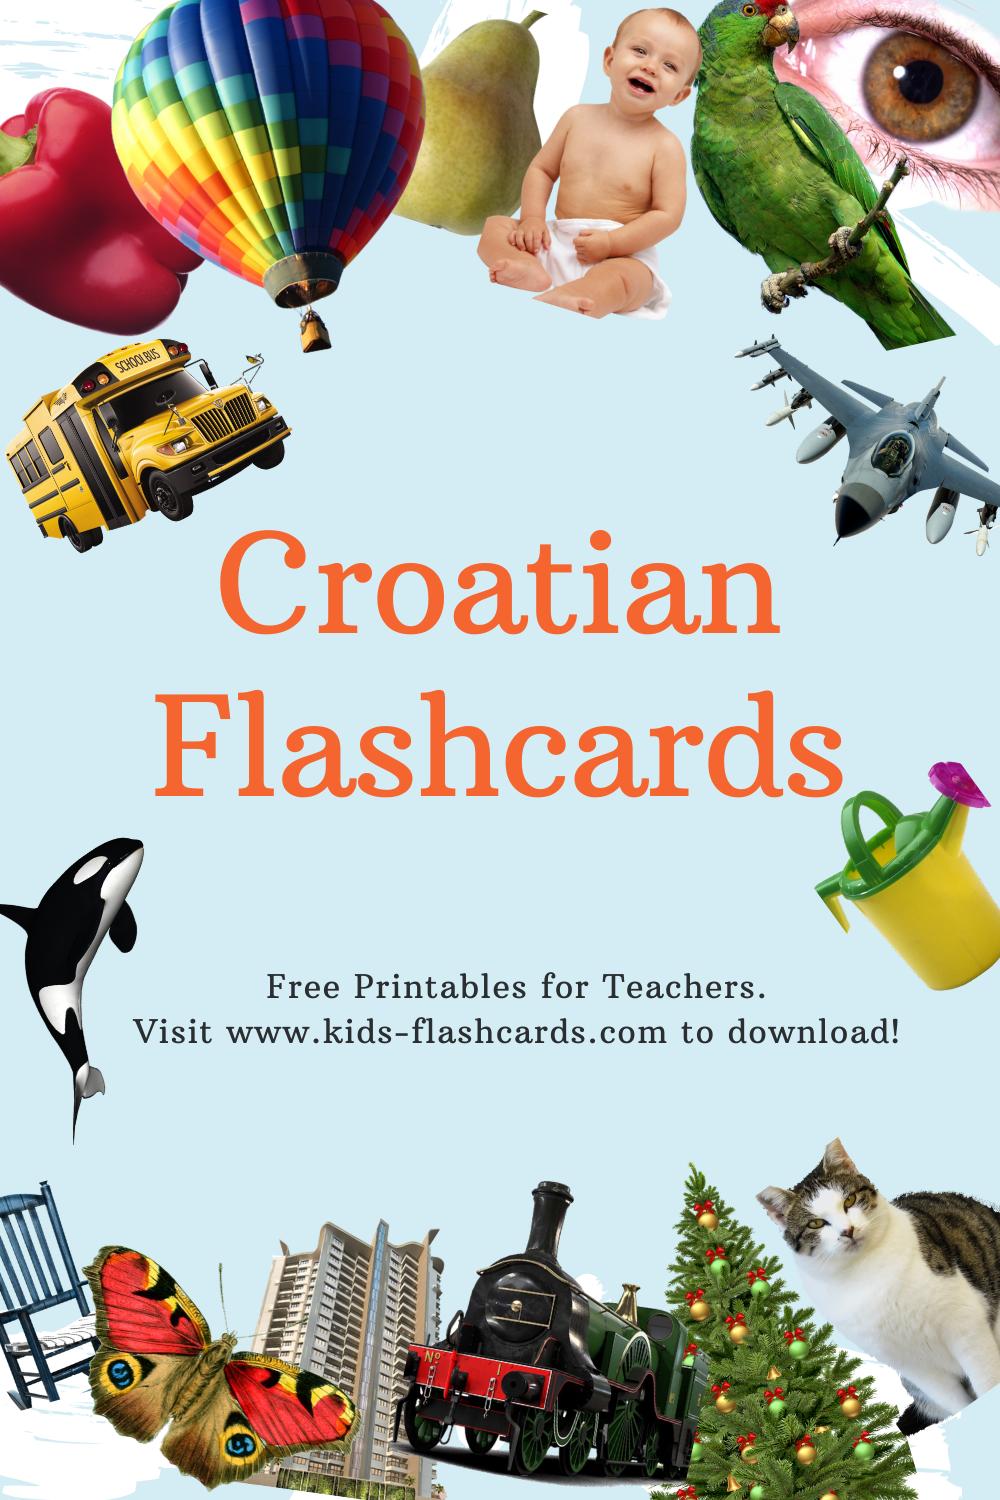 Worksheets to learn Croatian language